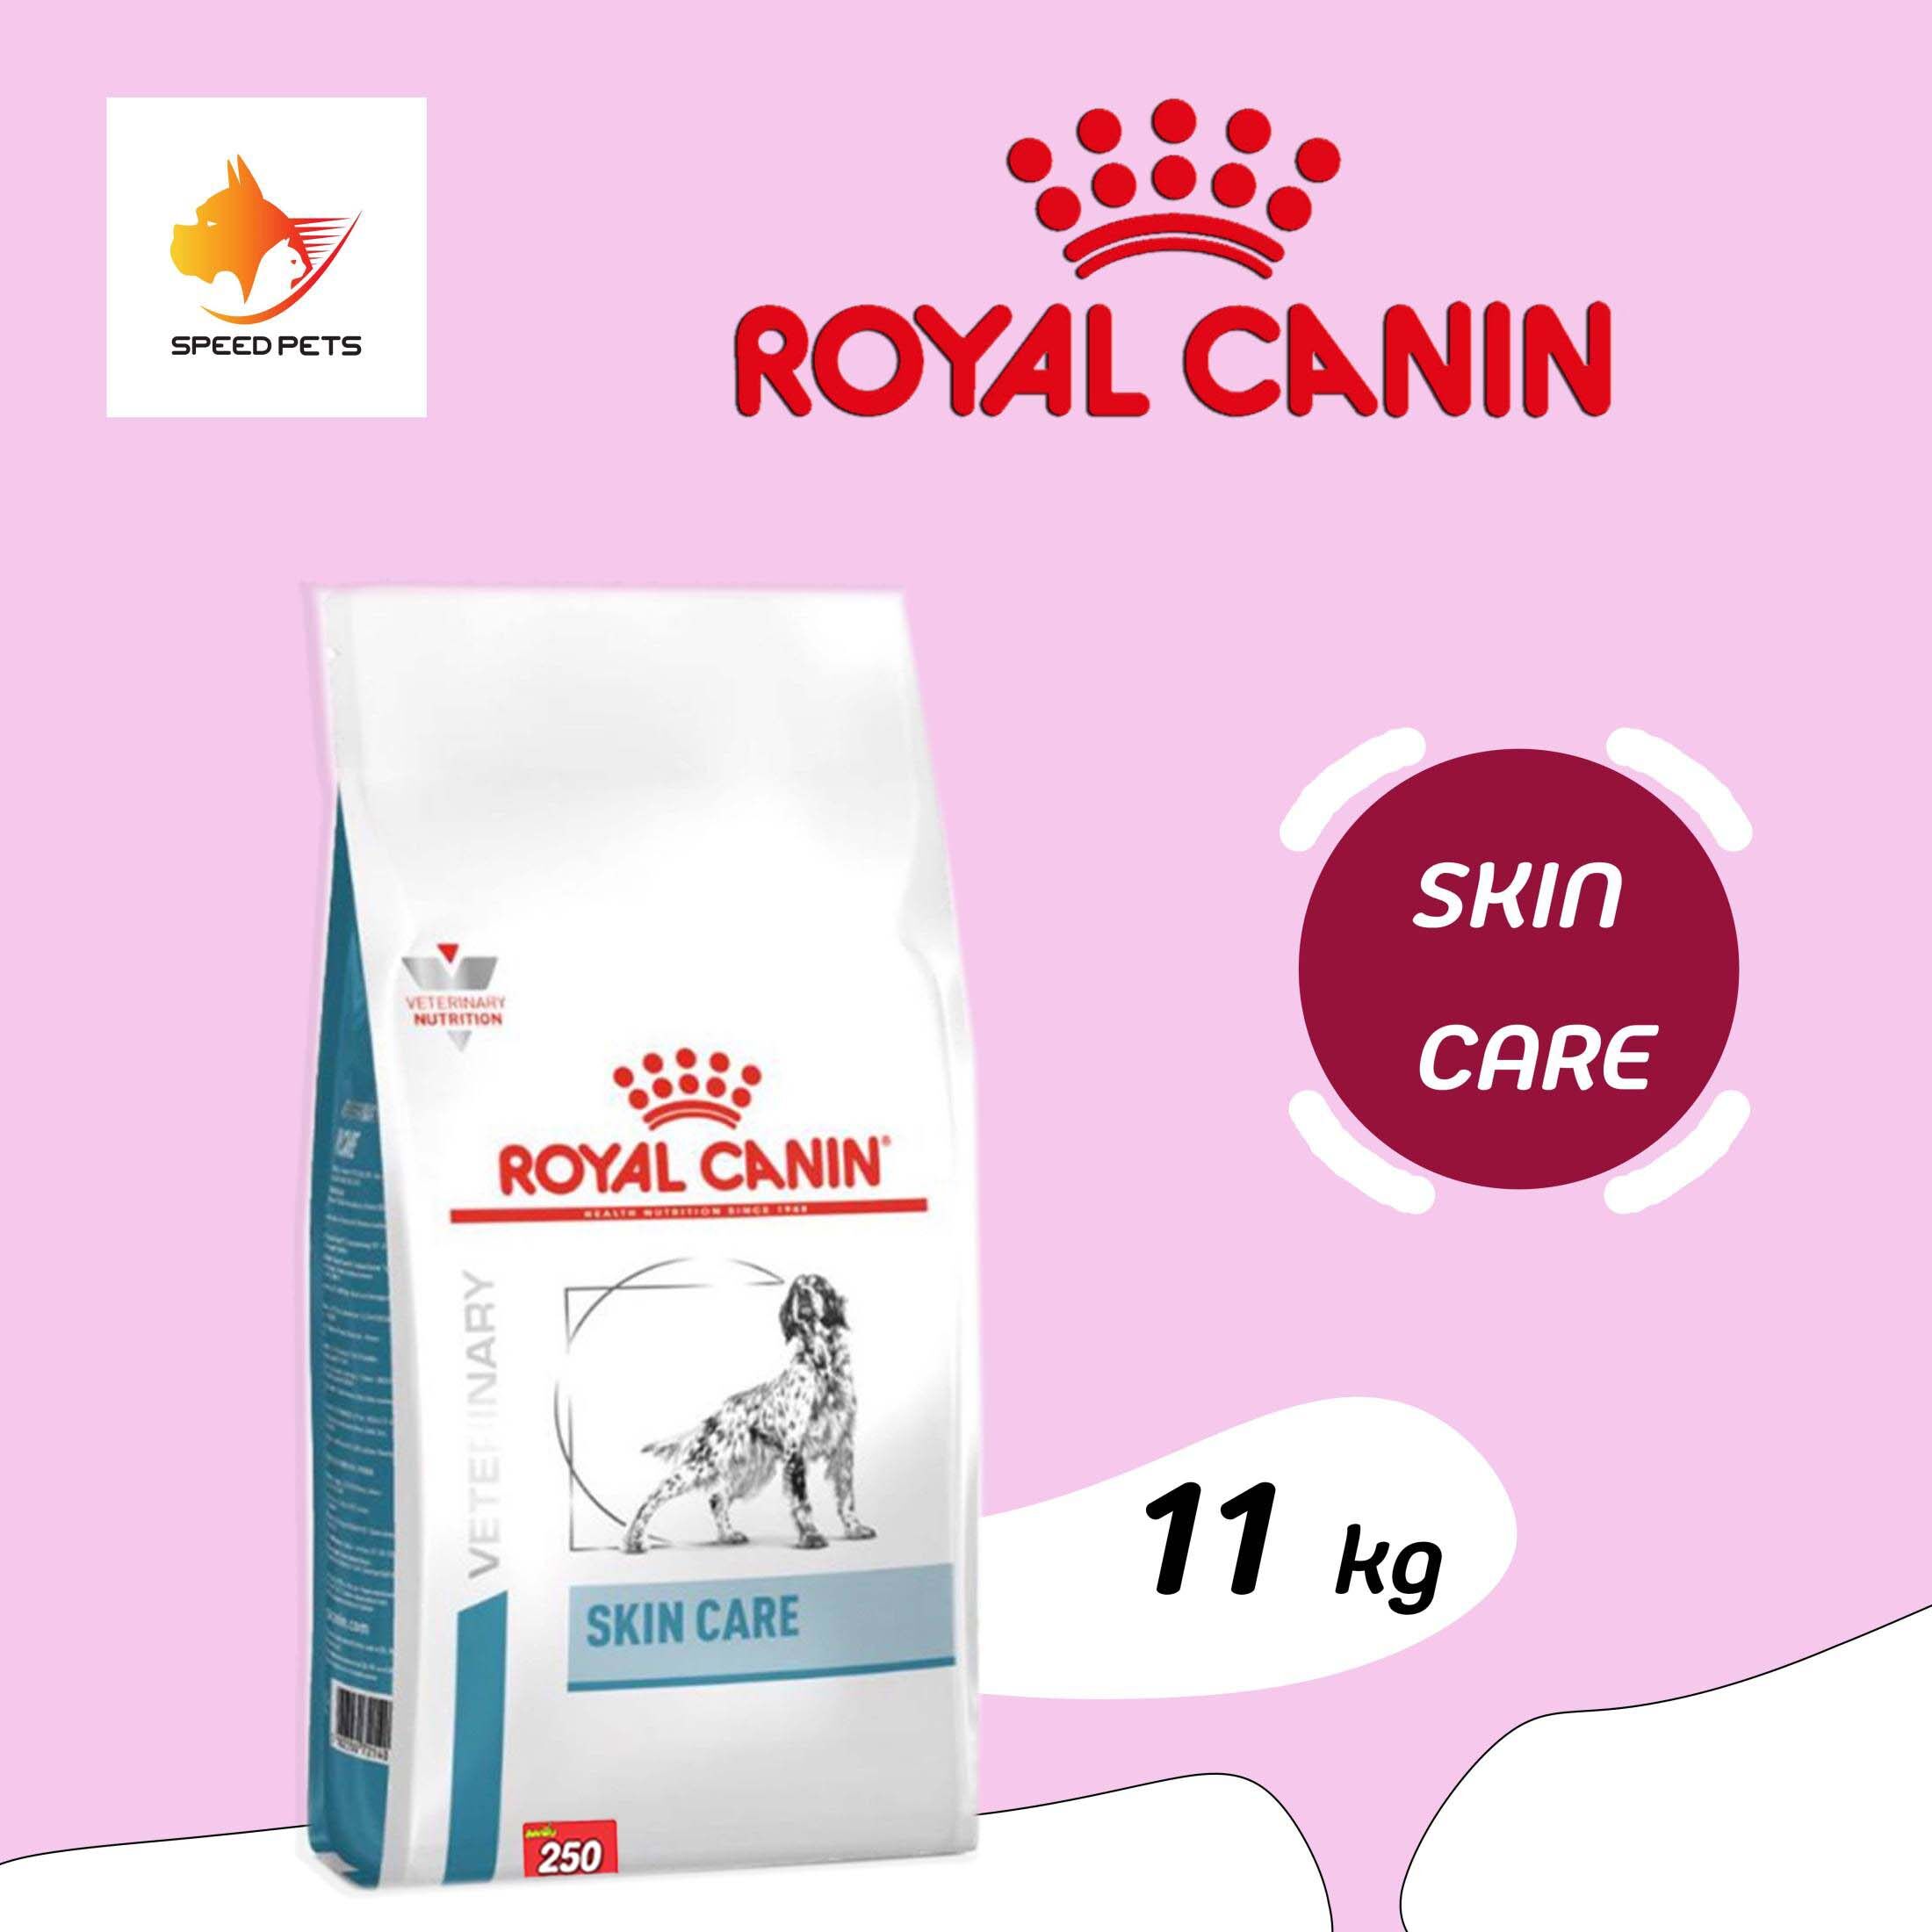 Royal canin Skin Care Dog Food อาหารสุนัข อาหารสุนัขบำรุงผิว เน้นบำรุงผิวหนัง สำหรับสุนัขที่เป็นโรคภูมิแพ้ผิวหนังหรือมีปัญหาผิวหนัง ชนิดเม็ด 11 kg